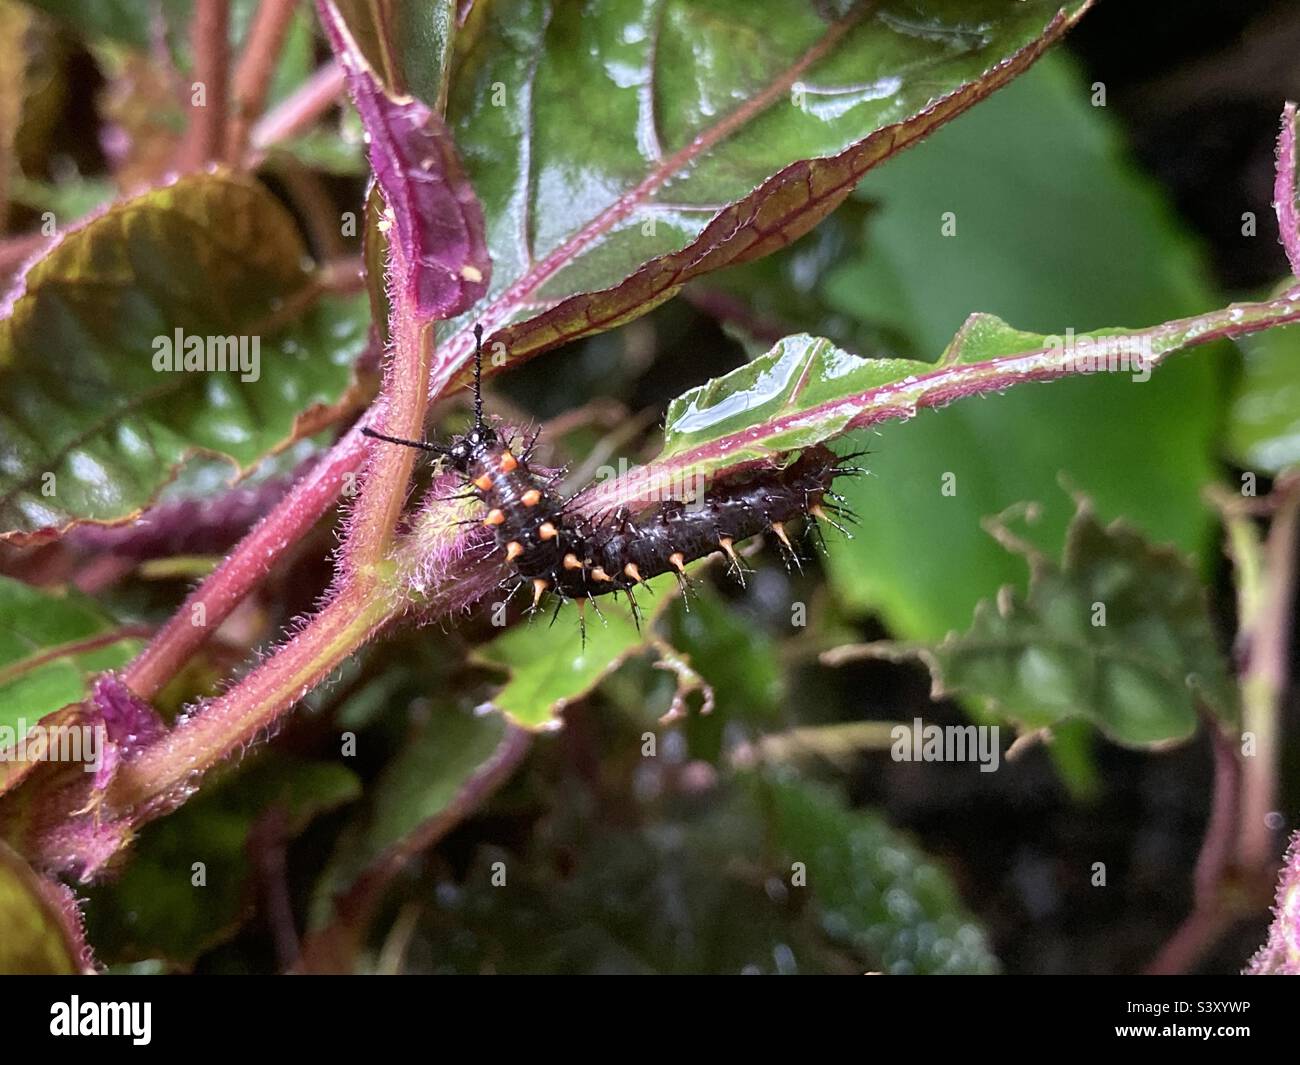 Malachite caterpillar on Hemigraphis plant Stock Photo